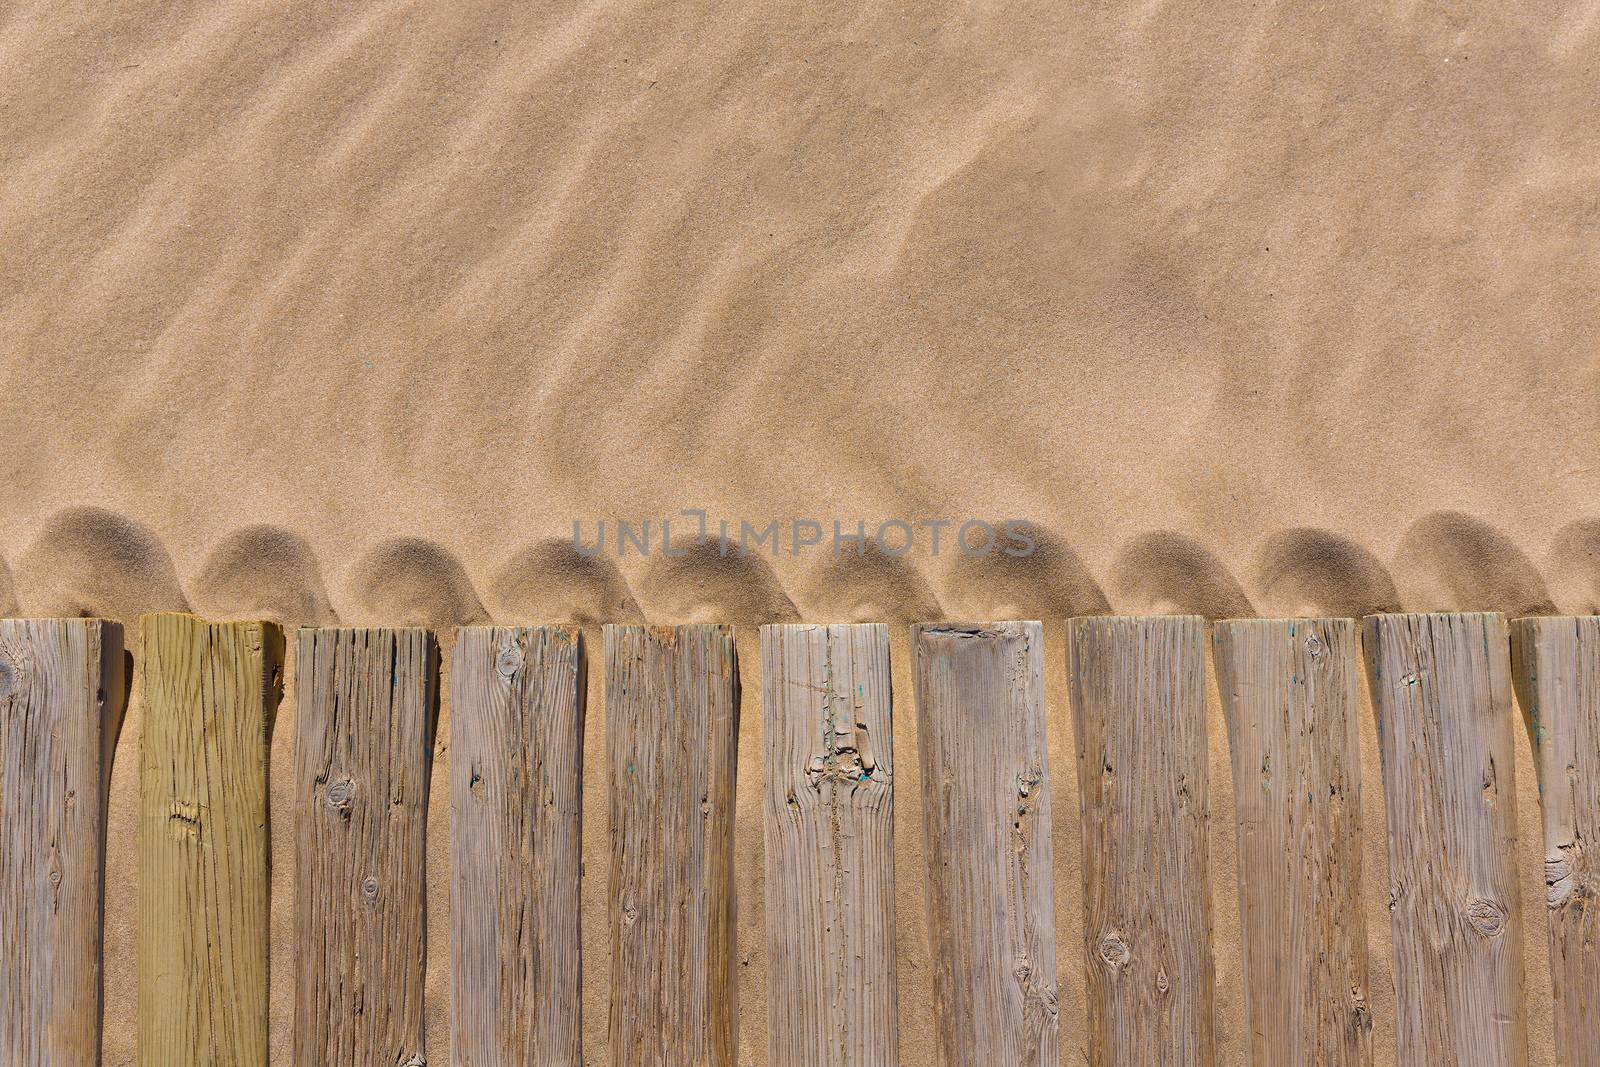 pine wood deck weathered in beach sand texture by lunamarina